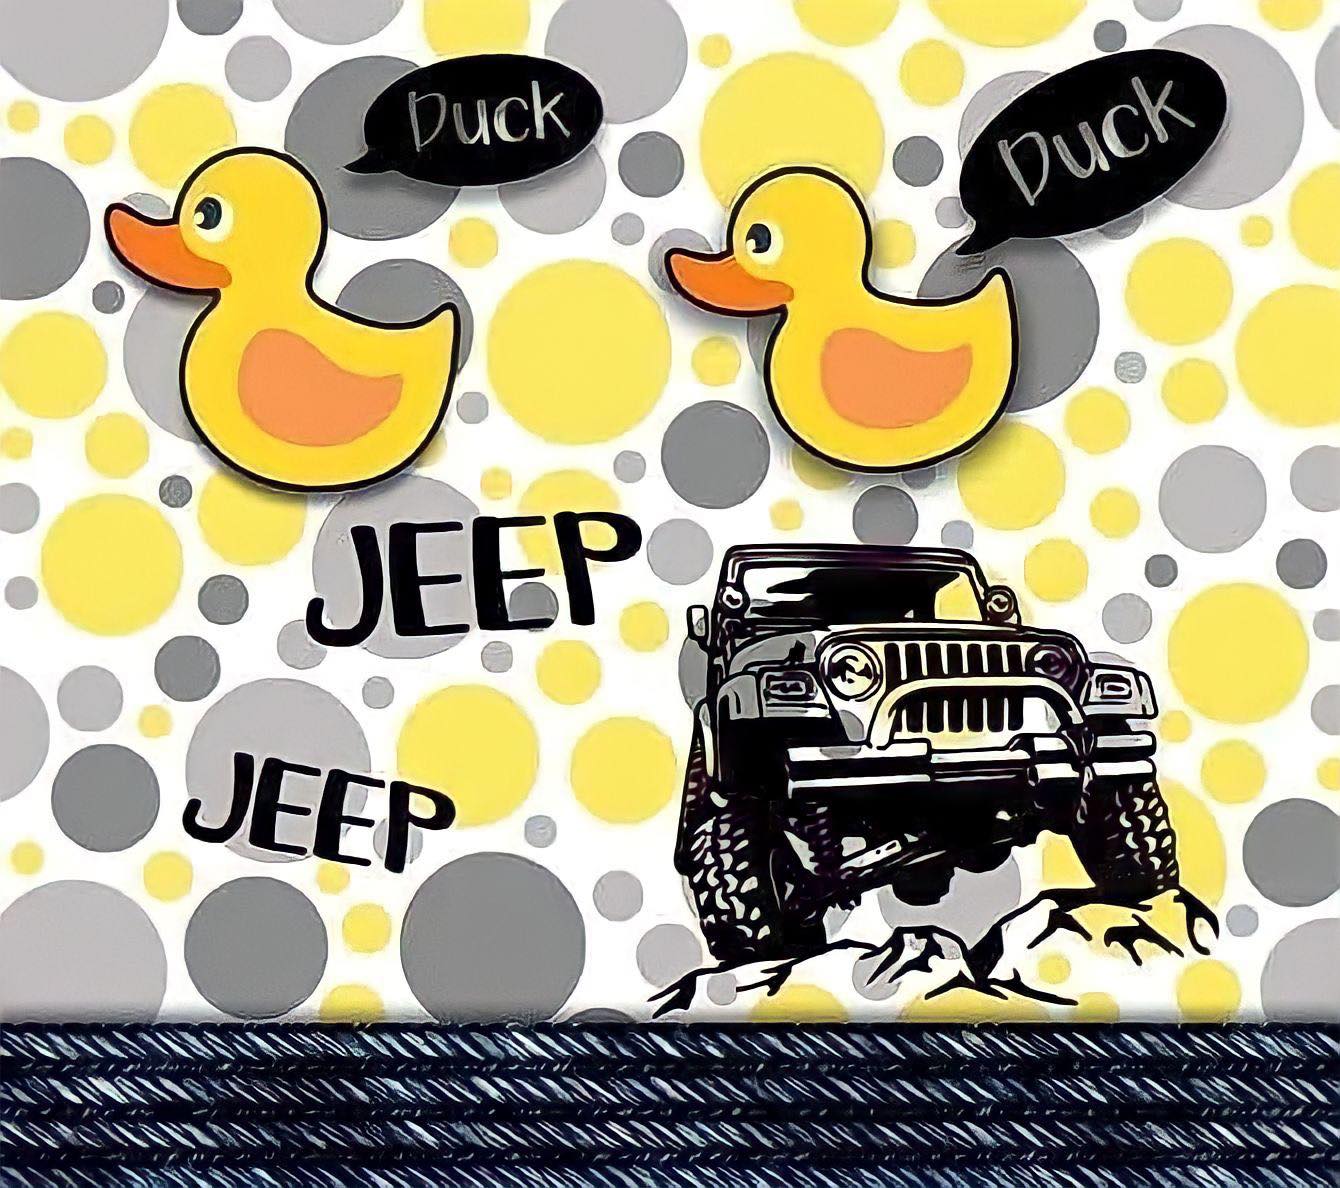 TW1769 duck jeep